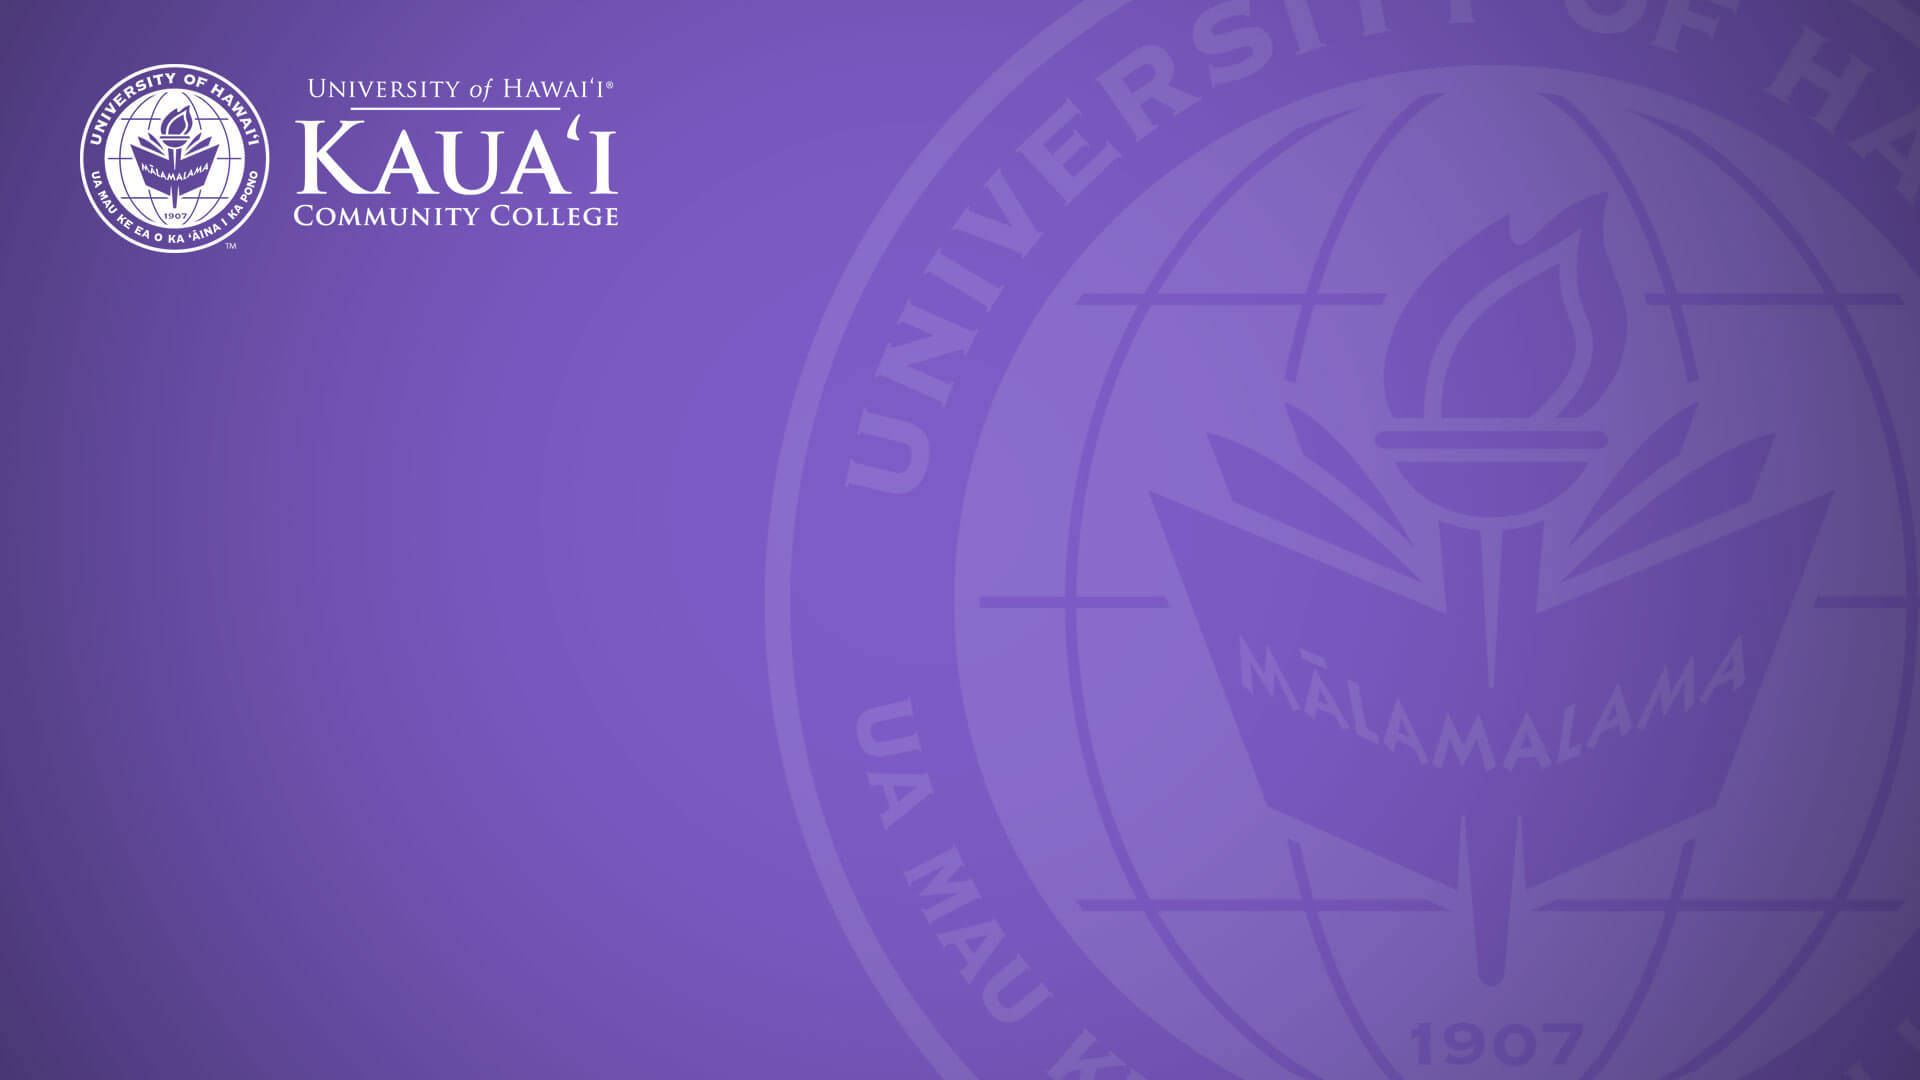 Logode La Universidad De Hawaii Kauai En Color Violeta. Fondo de pantalla